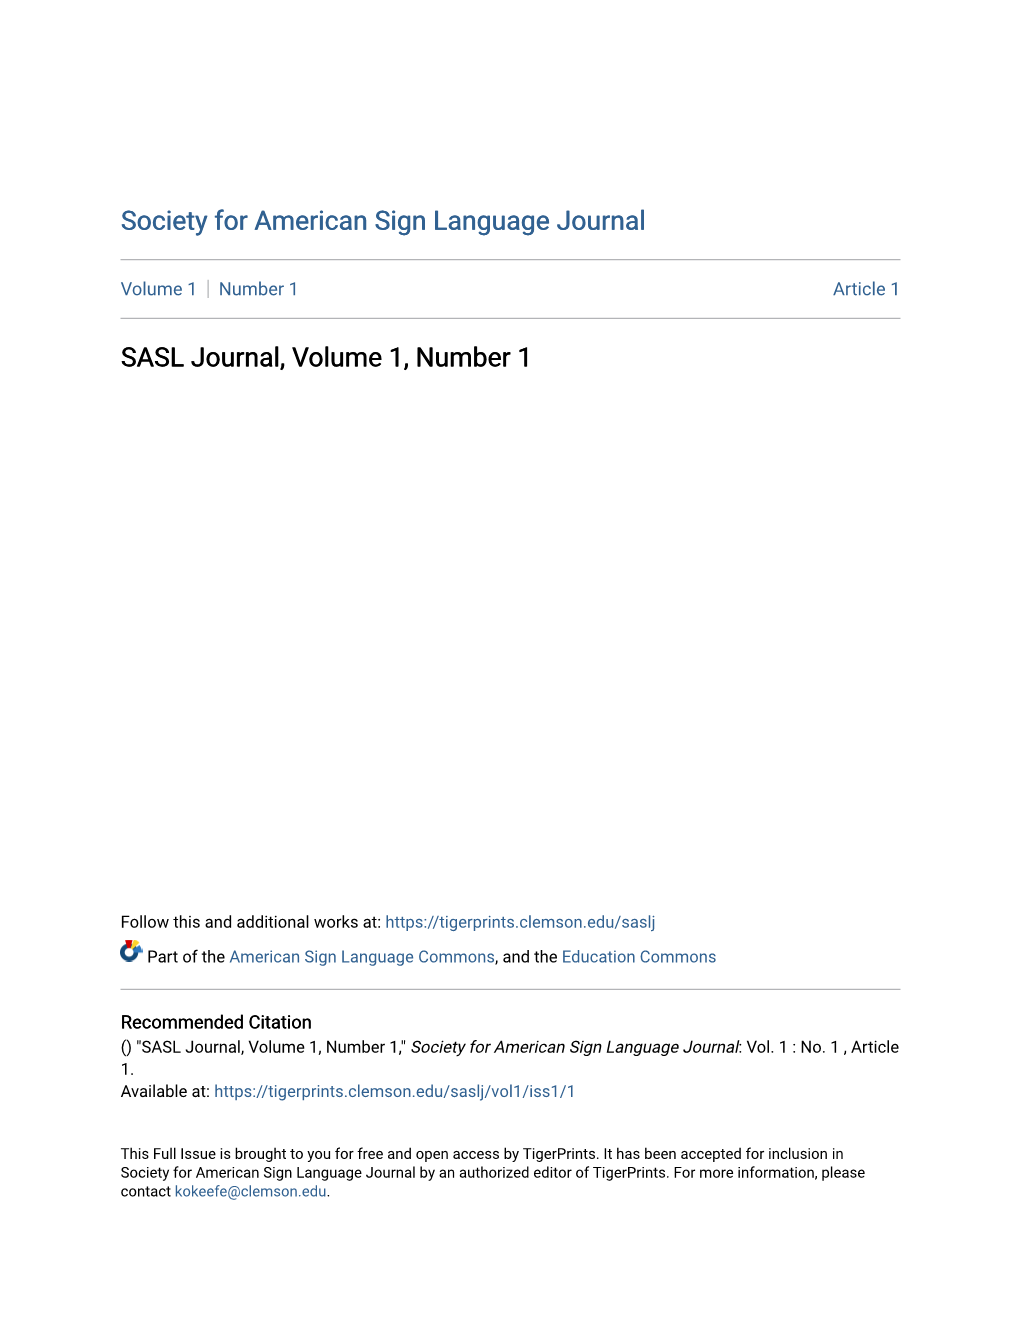 SASL Journal, Volume 1, Number 1